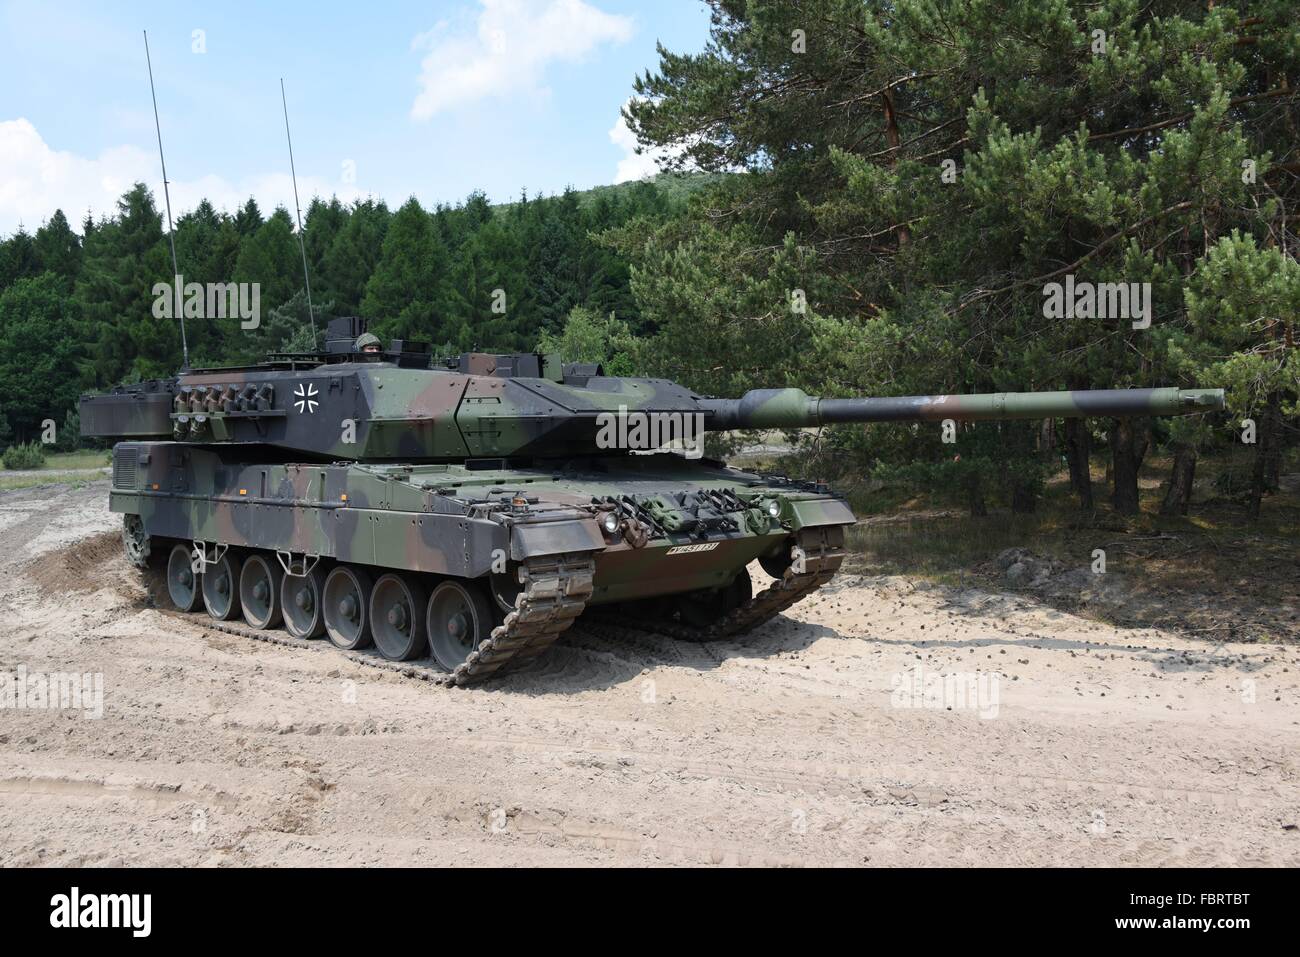 leopard-2a7-main-battle-tank-of-2nd-company-203rd-armor-battalion-FBRTBT.jpg